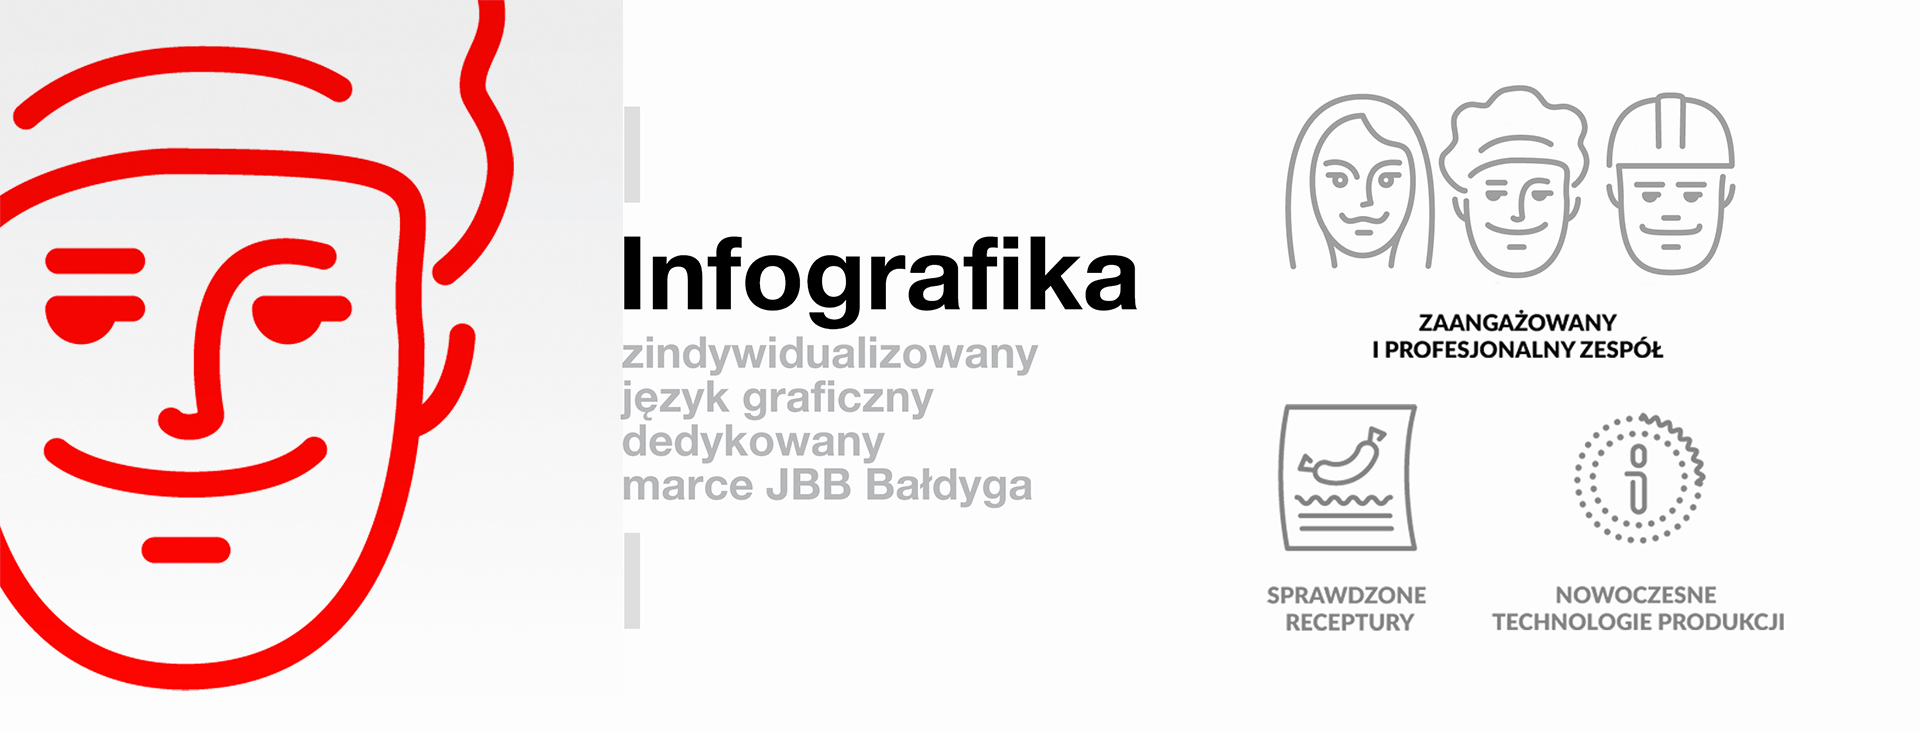 Infografika dedykowana marce JBB Bałdyga